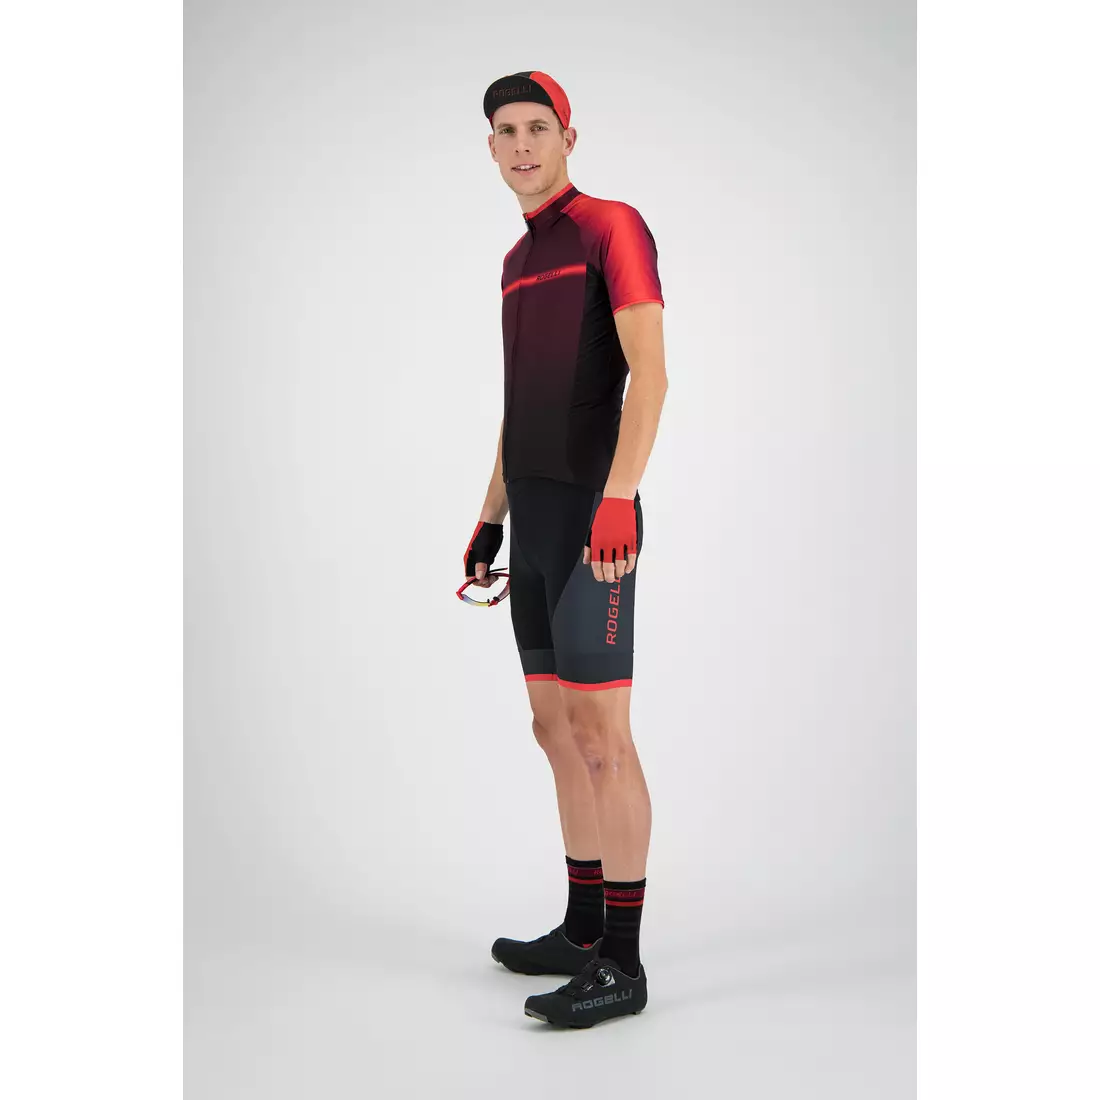 ROGELLI Fuse Men's bib shorts black/red 002.232 002.232